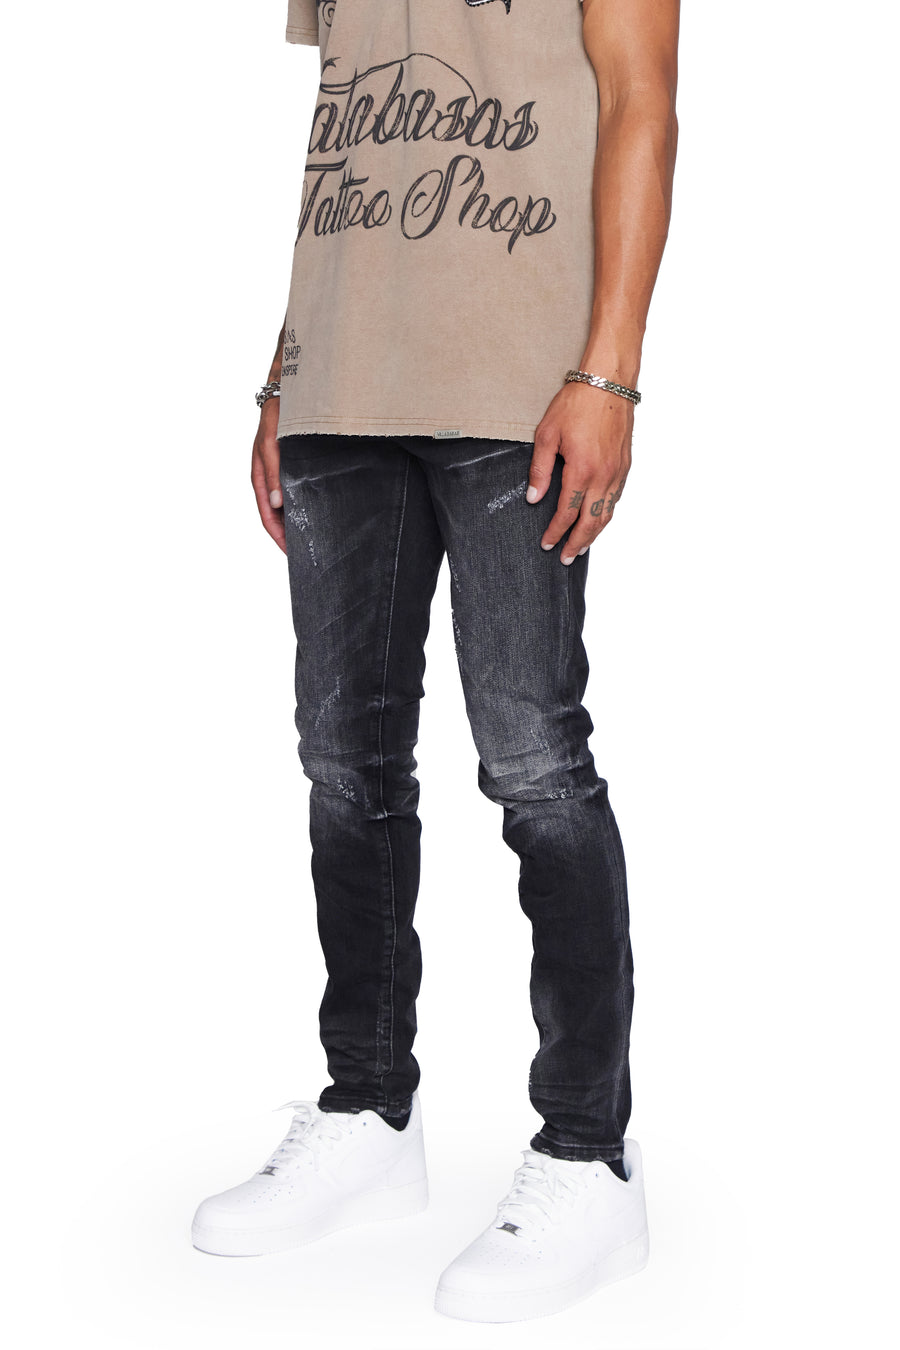 StclaircomoShops | GARCIA Jeans nero | Rick Owens 'Exclusive for  StclaircomoShops' jeans | Women's Clothing